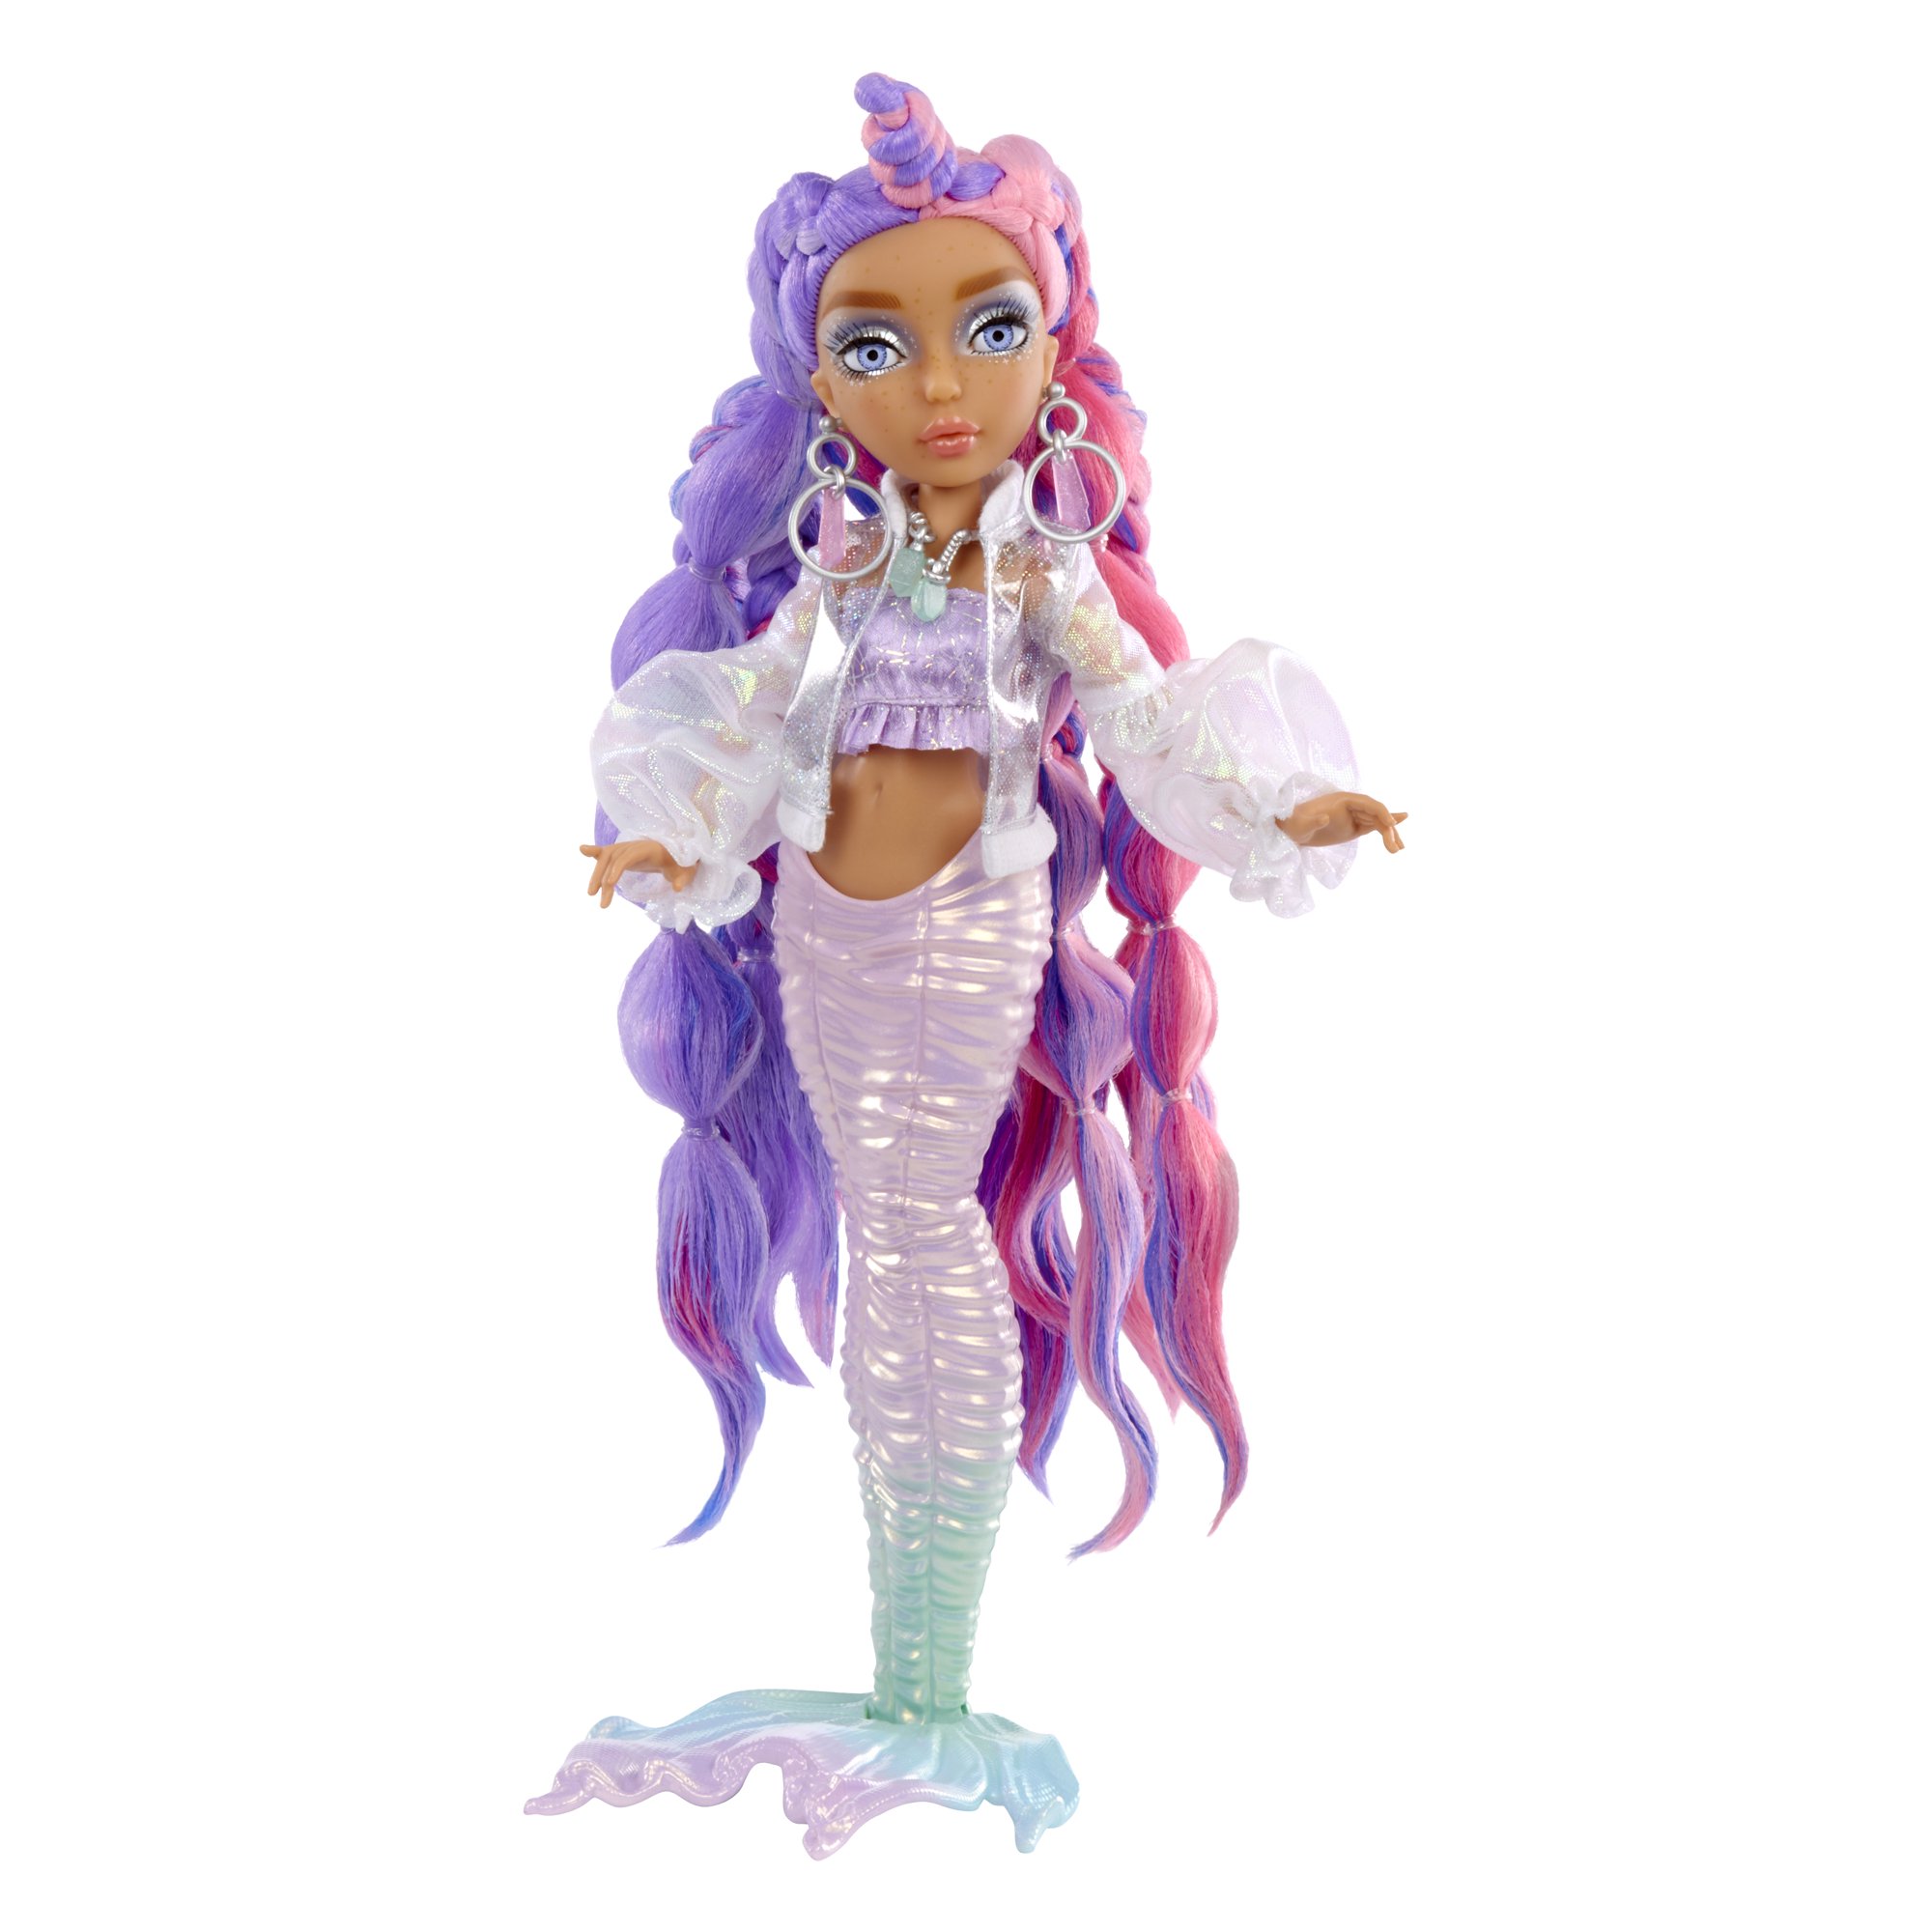 Mermaze Mermaidz Series 1 dolls - new mermaid dolls from MGA ...